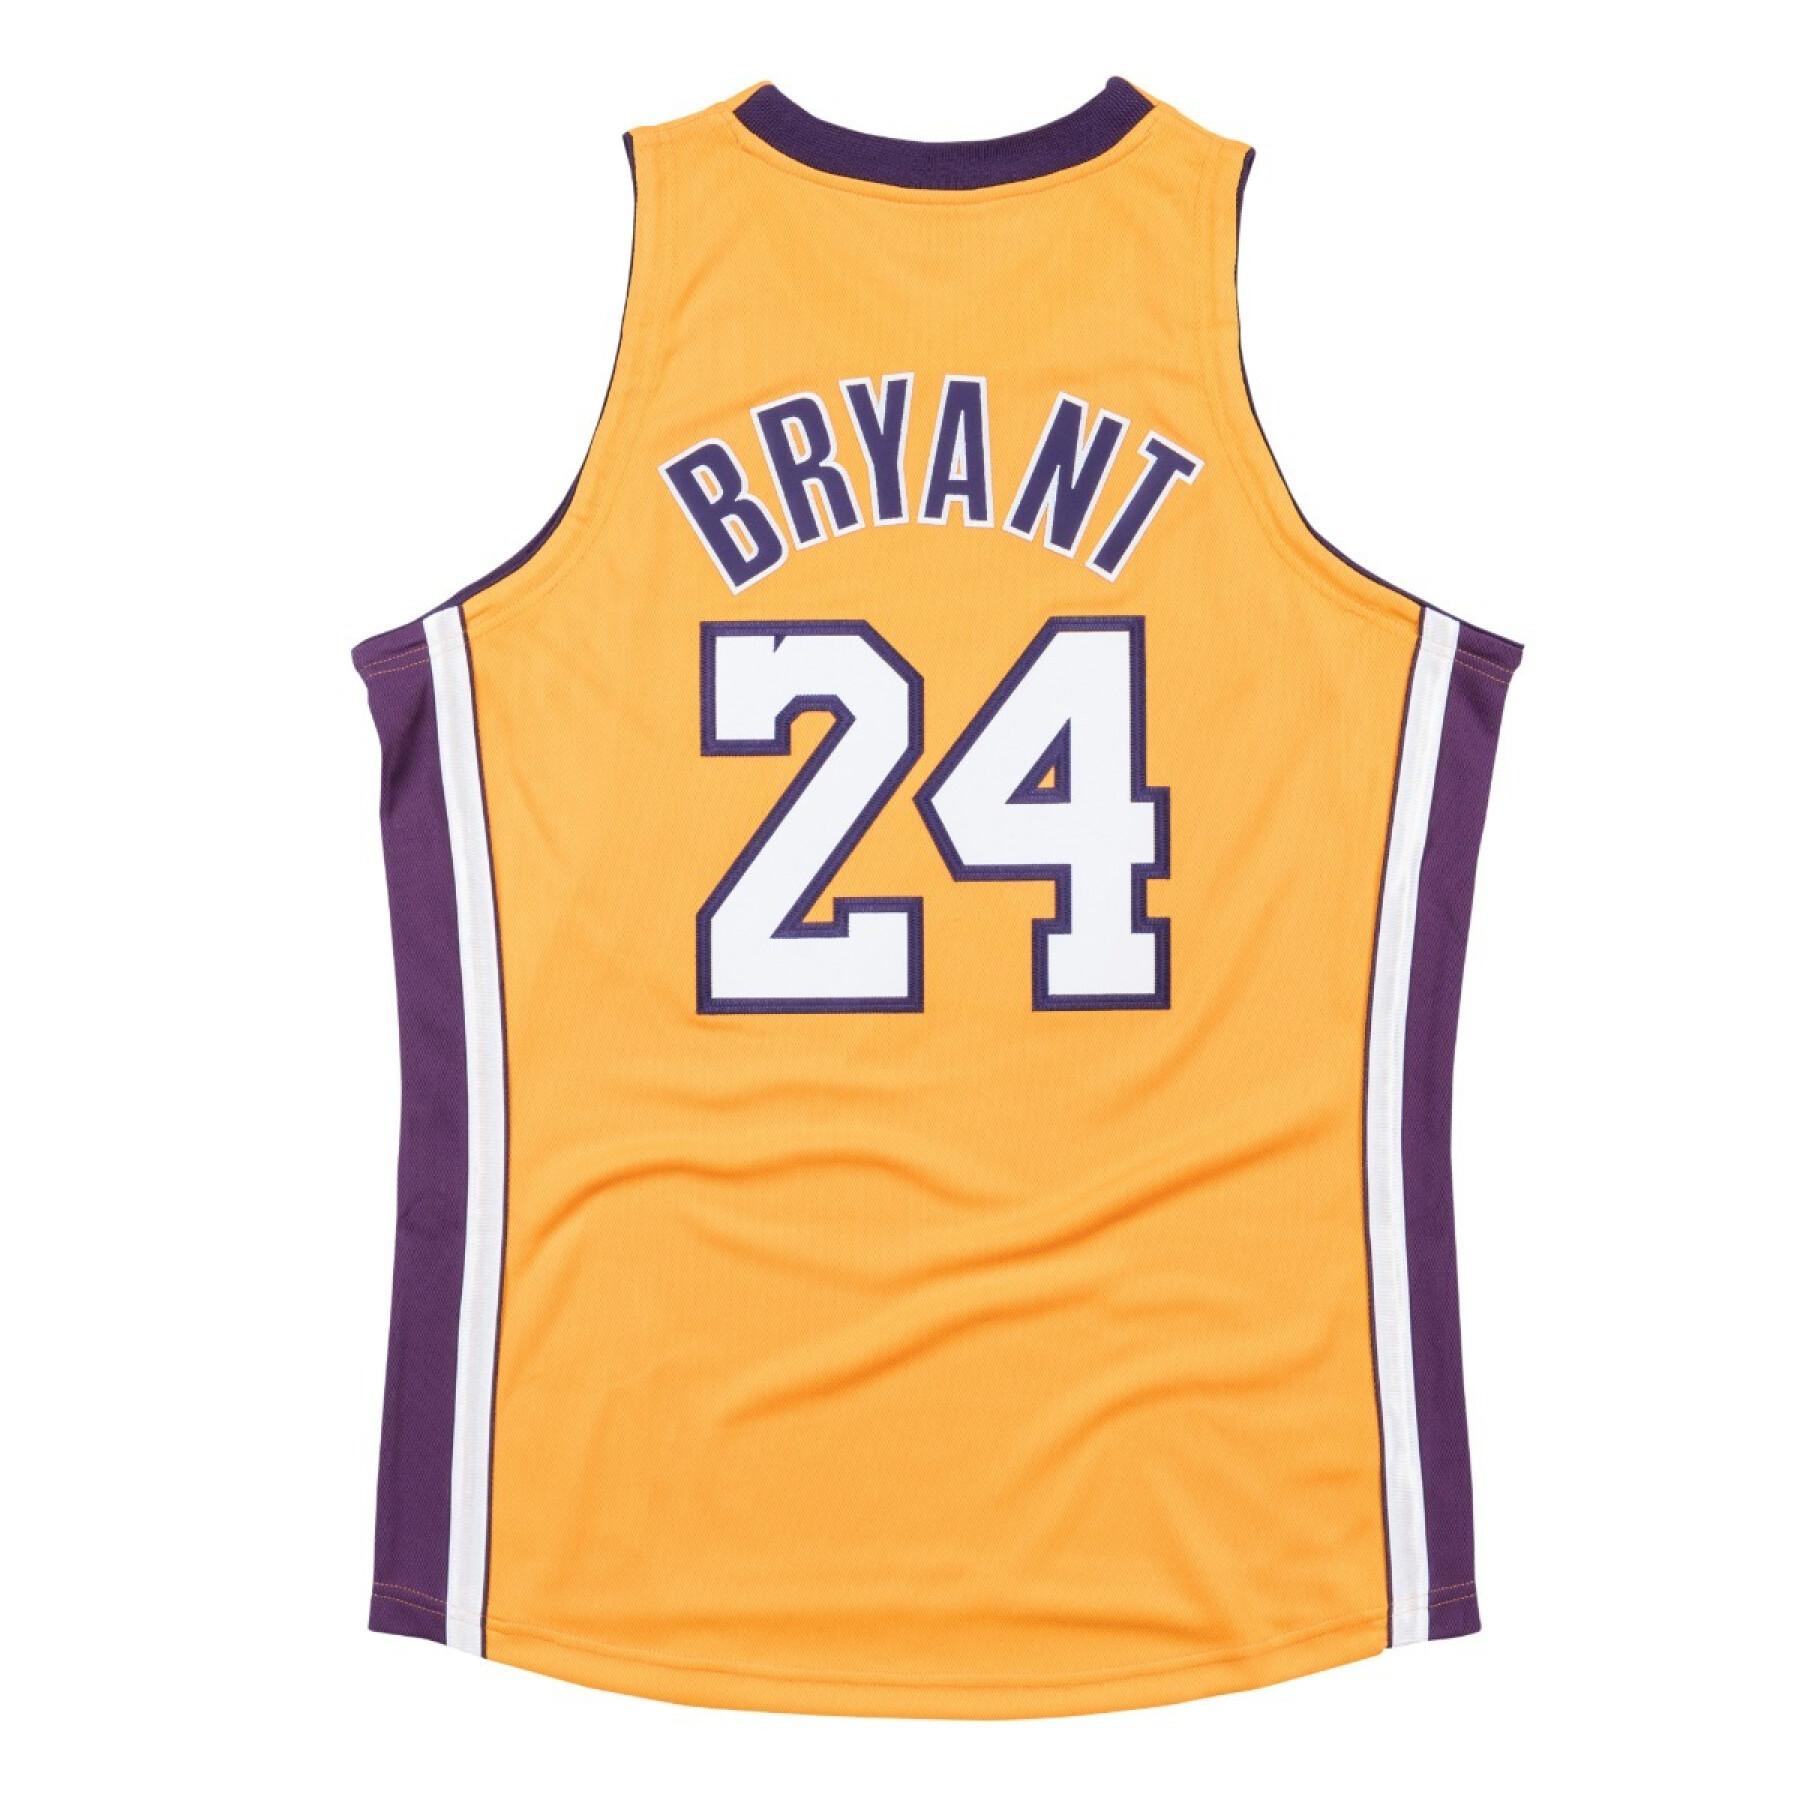 Trikot Los Angeles Lakers NBA Authentic Kobe Bryant